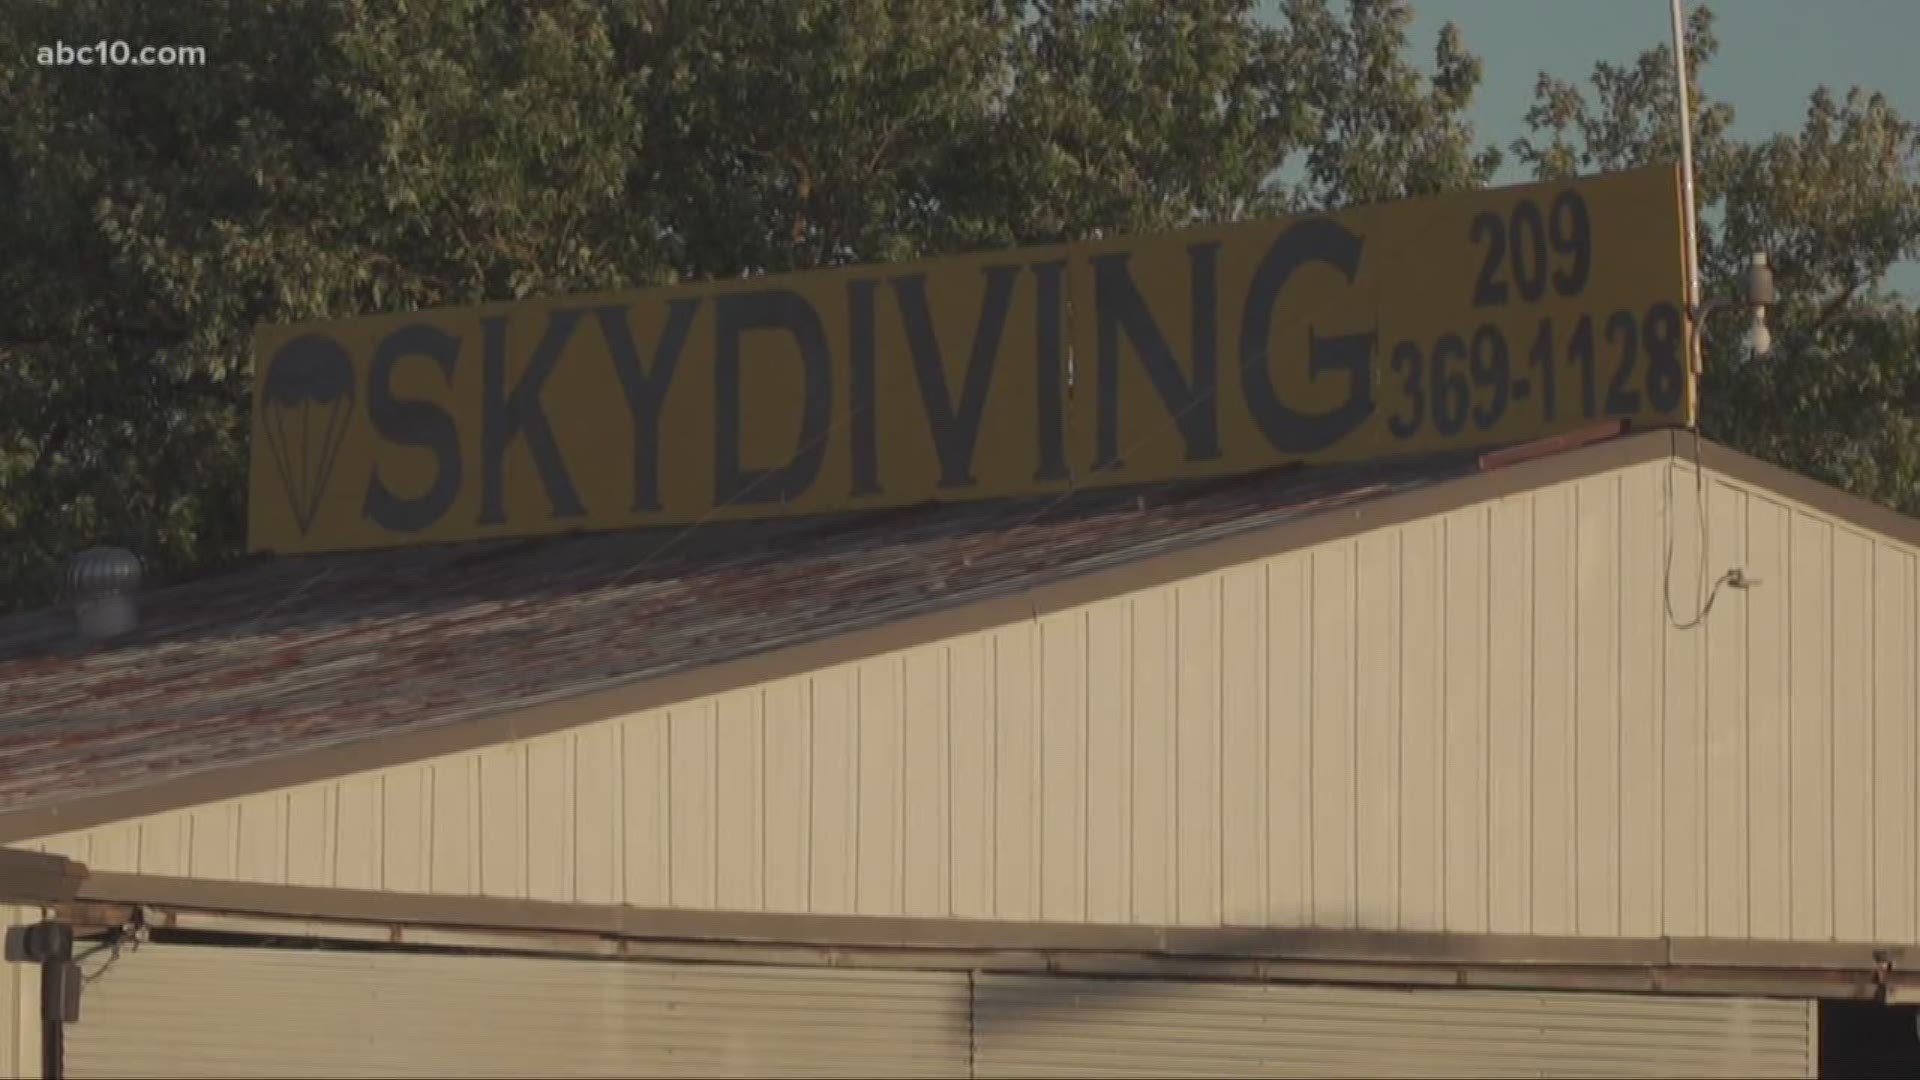 Lodi skydiving death 62yearold Colorado woman identified as victim